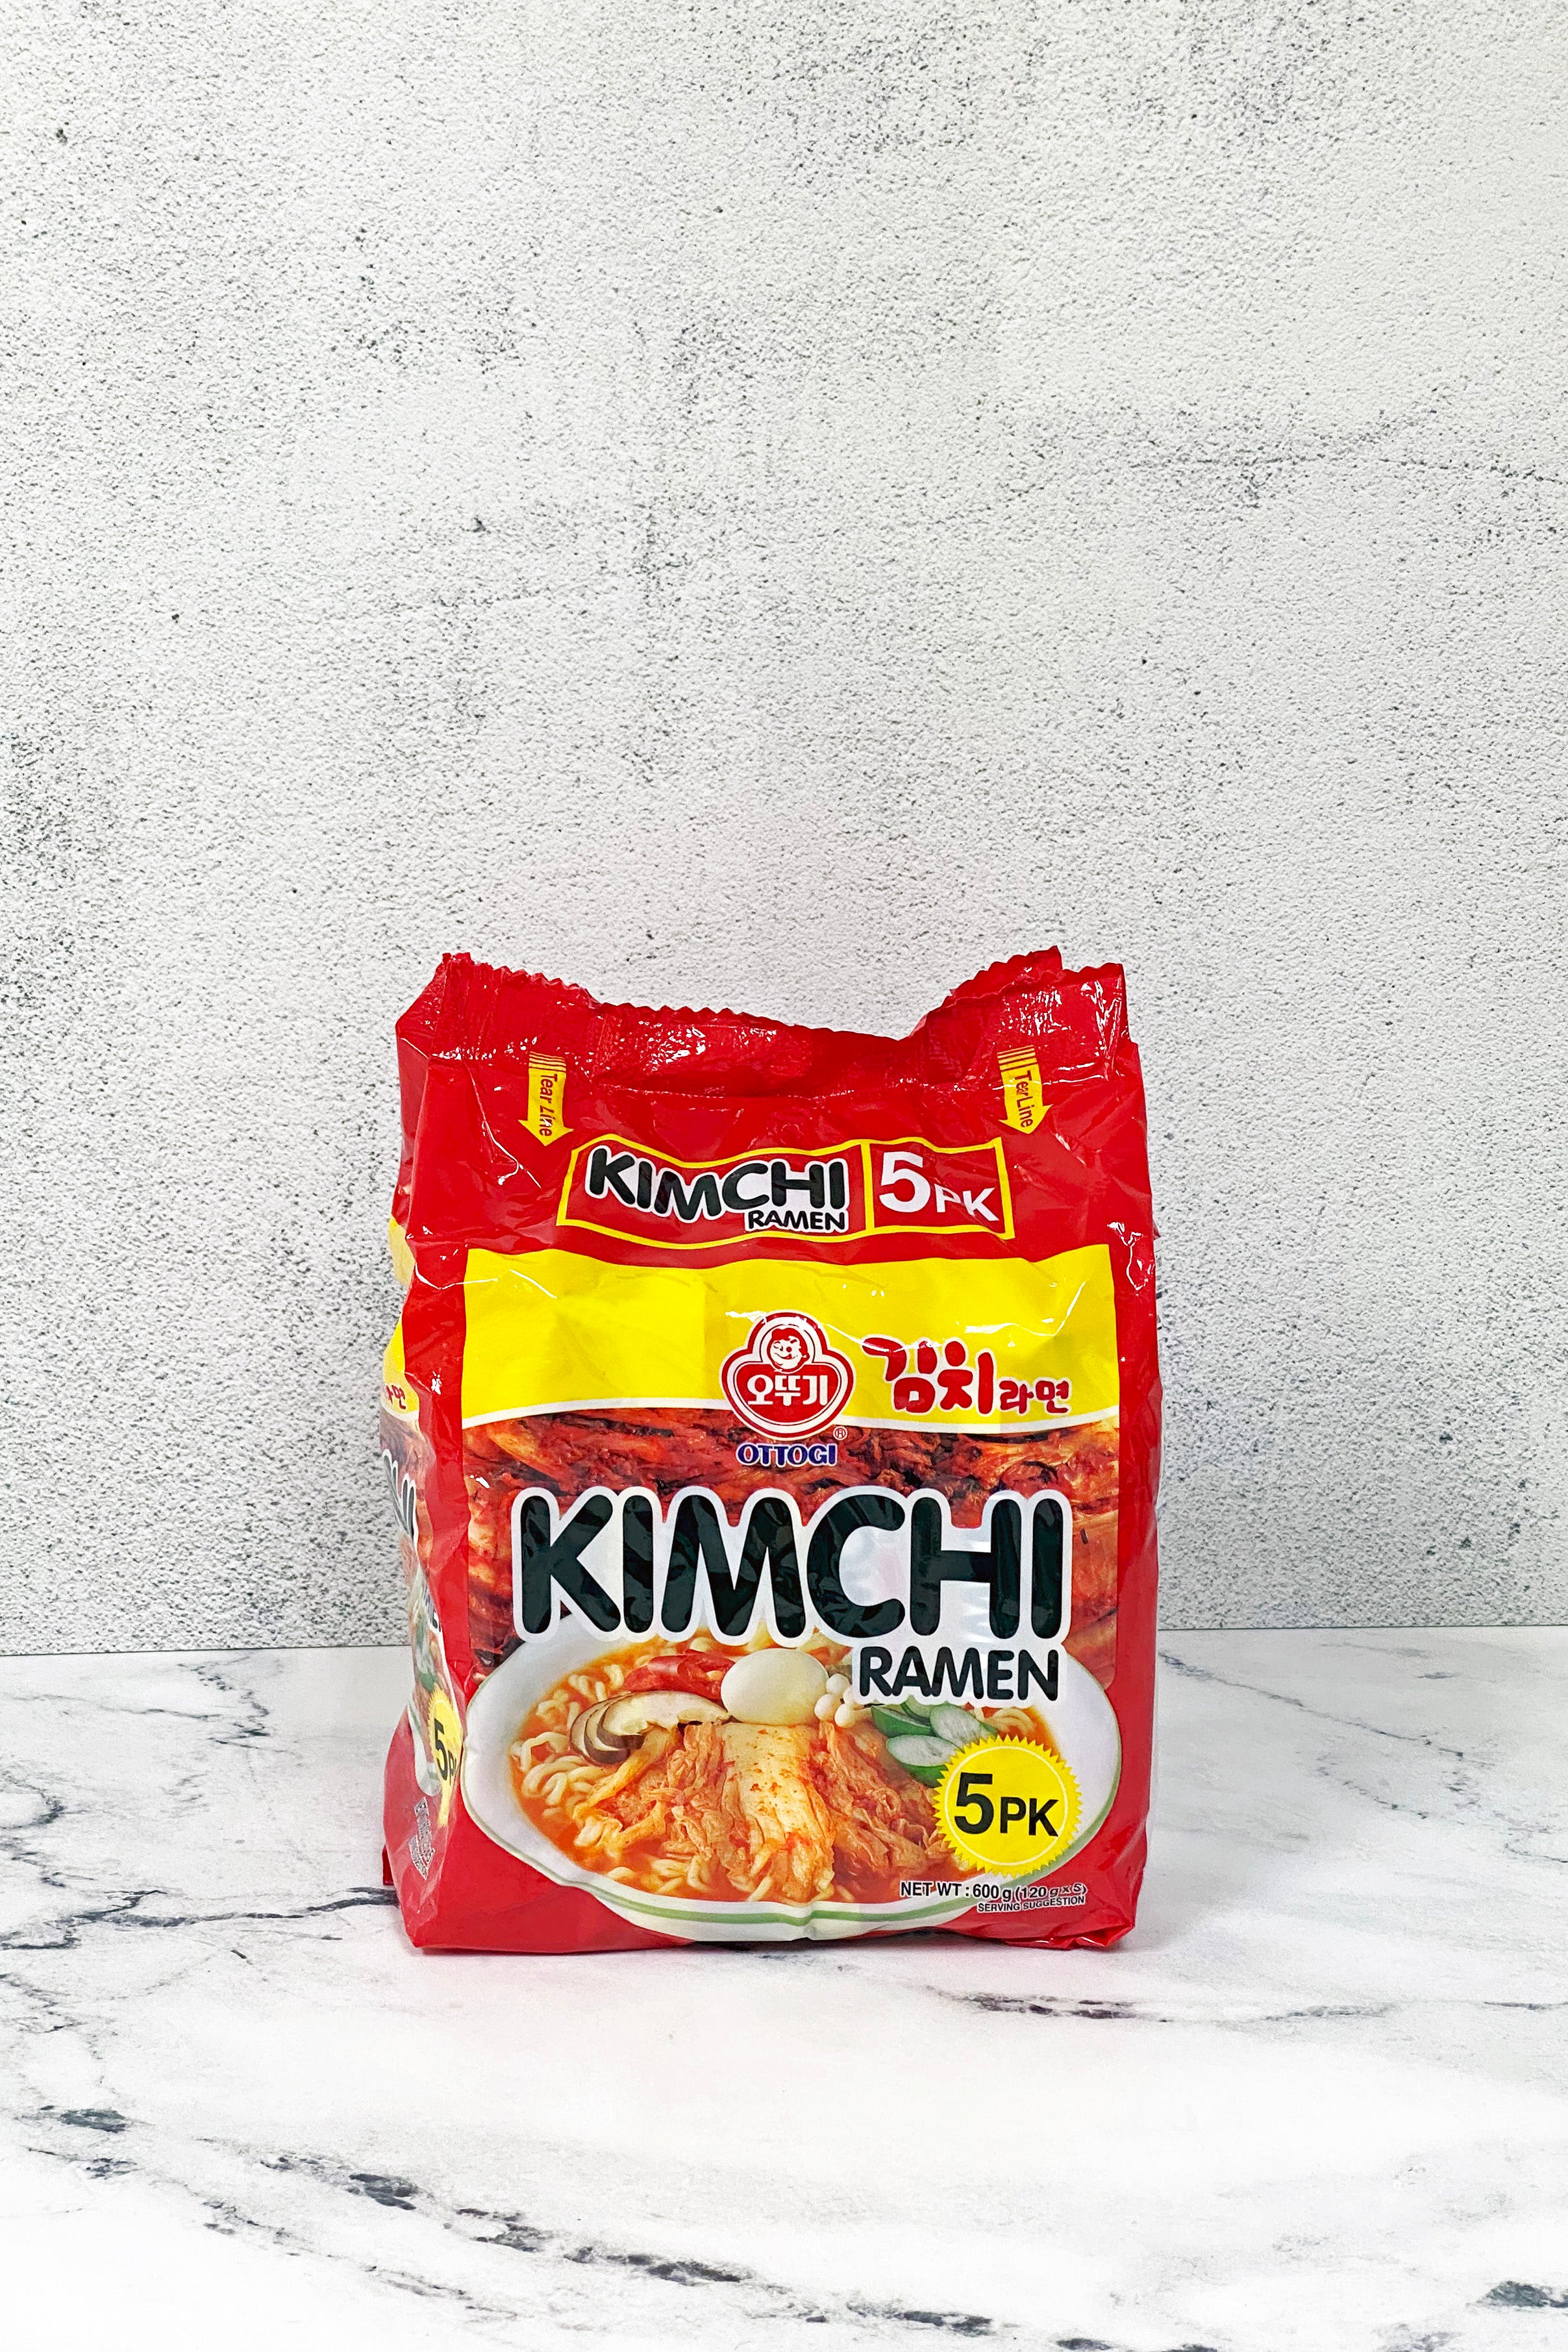 Kimchi Ramen 5PK